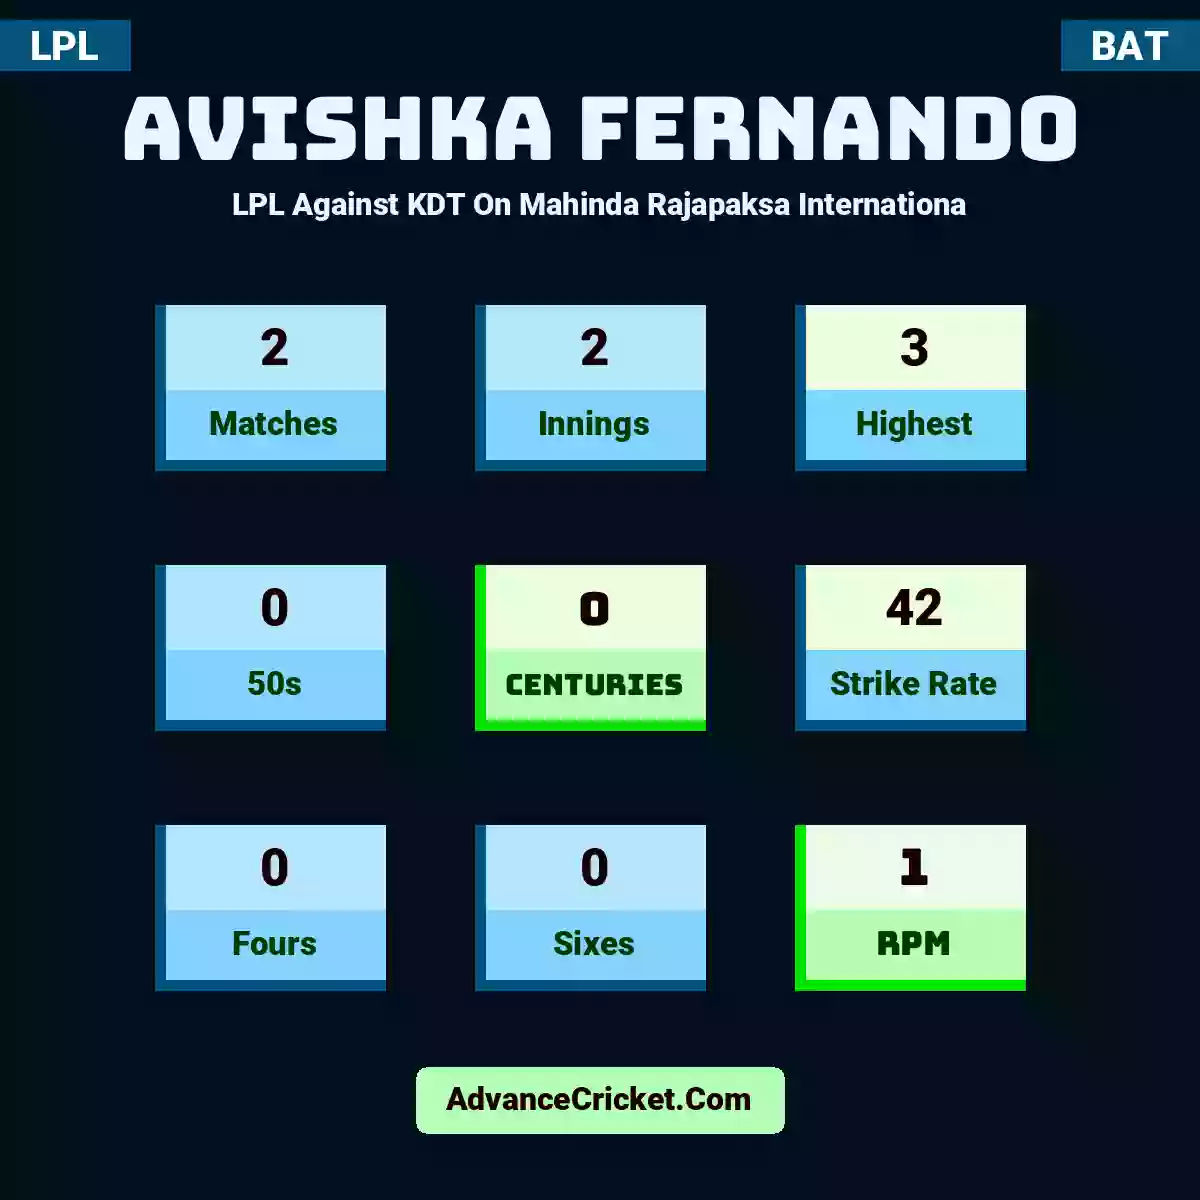 Avishka Fernando LPL  Against KDT On Mahinda Rajapaksa Internationa, Avishka Fernando played 2 matches, scored 3 runs as highest, 0 half-centuries, and 0 centuries, with a strike rate of 42. A.Fernando hit 0 fours and 0 sixes, with an RPM of 1.